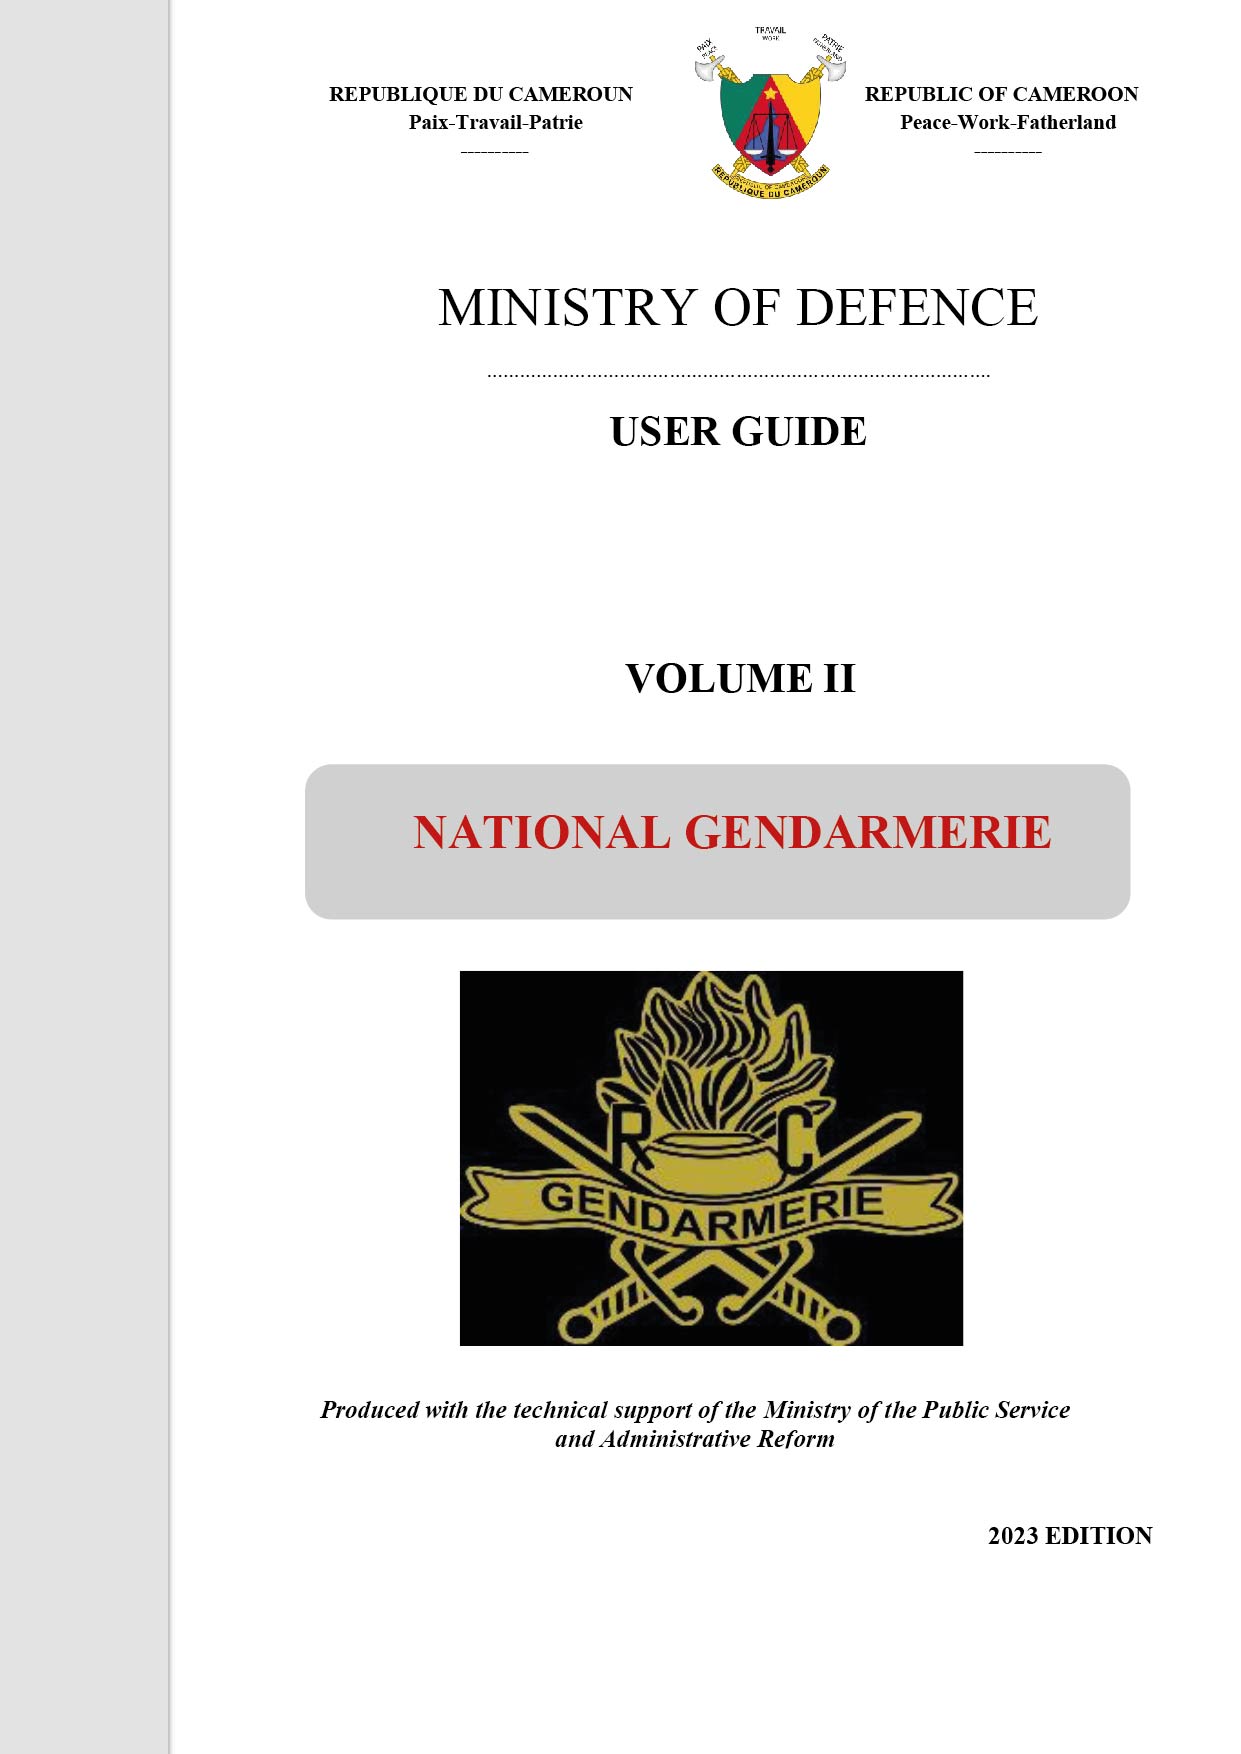 USER GUIDE NATIONAL GENDARMERIE VOLUME II